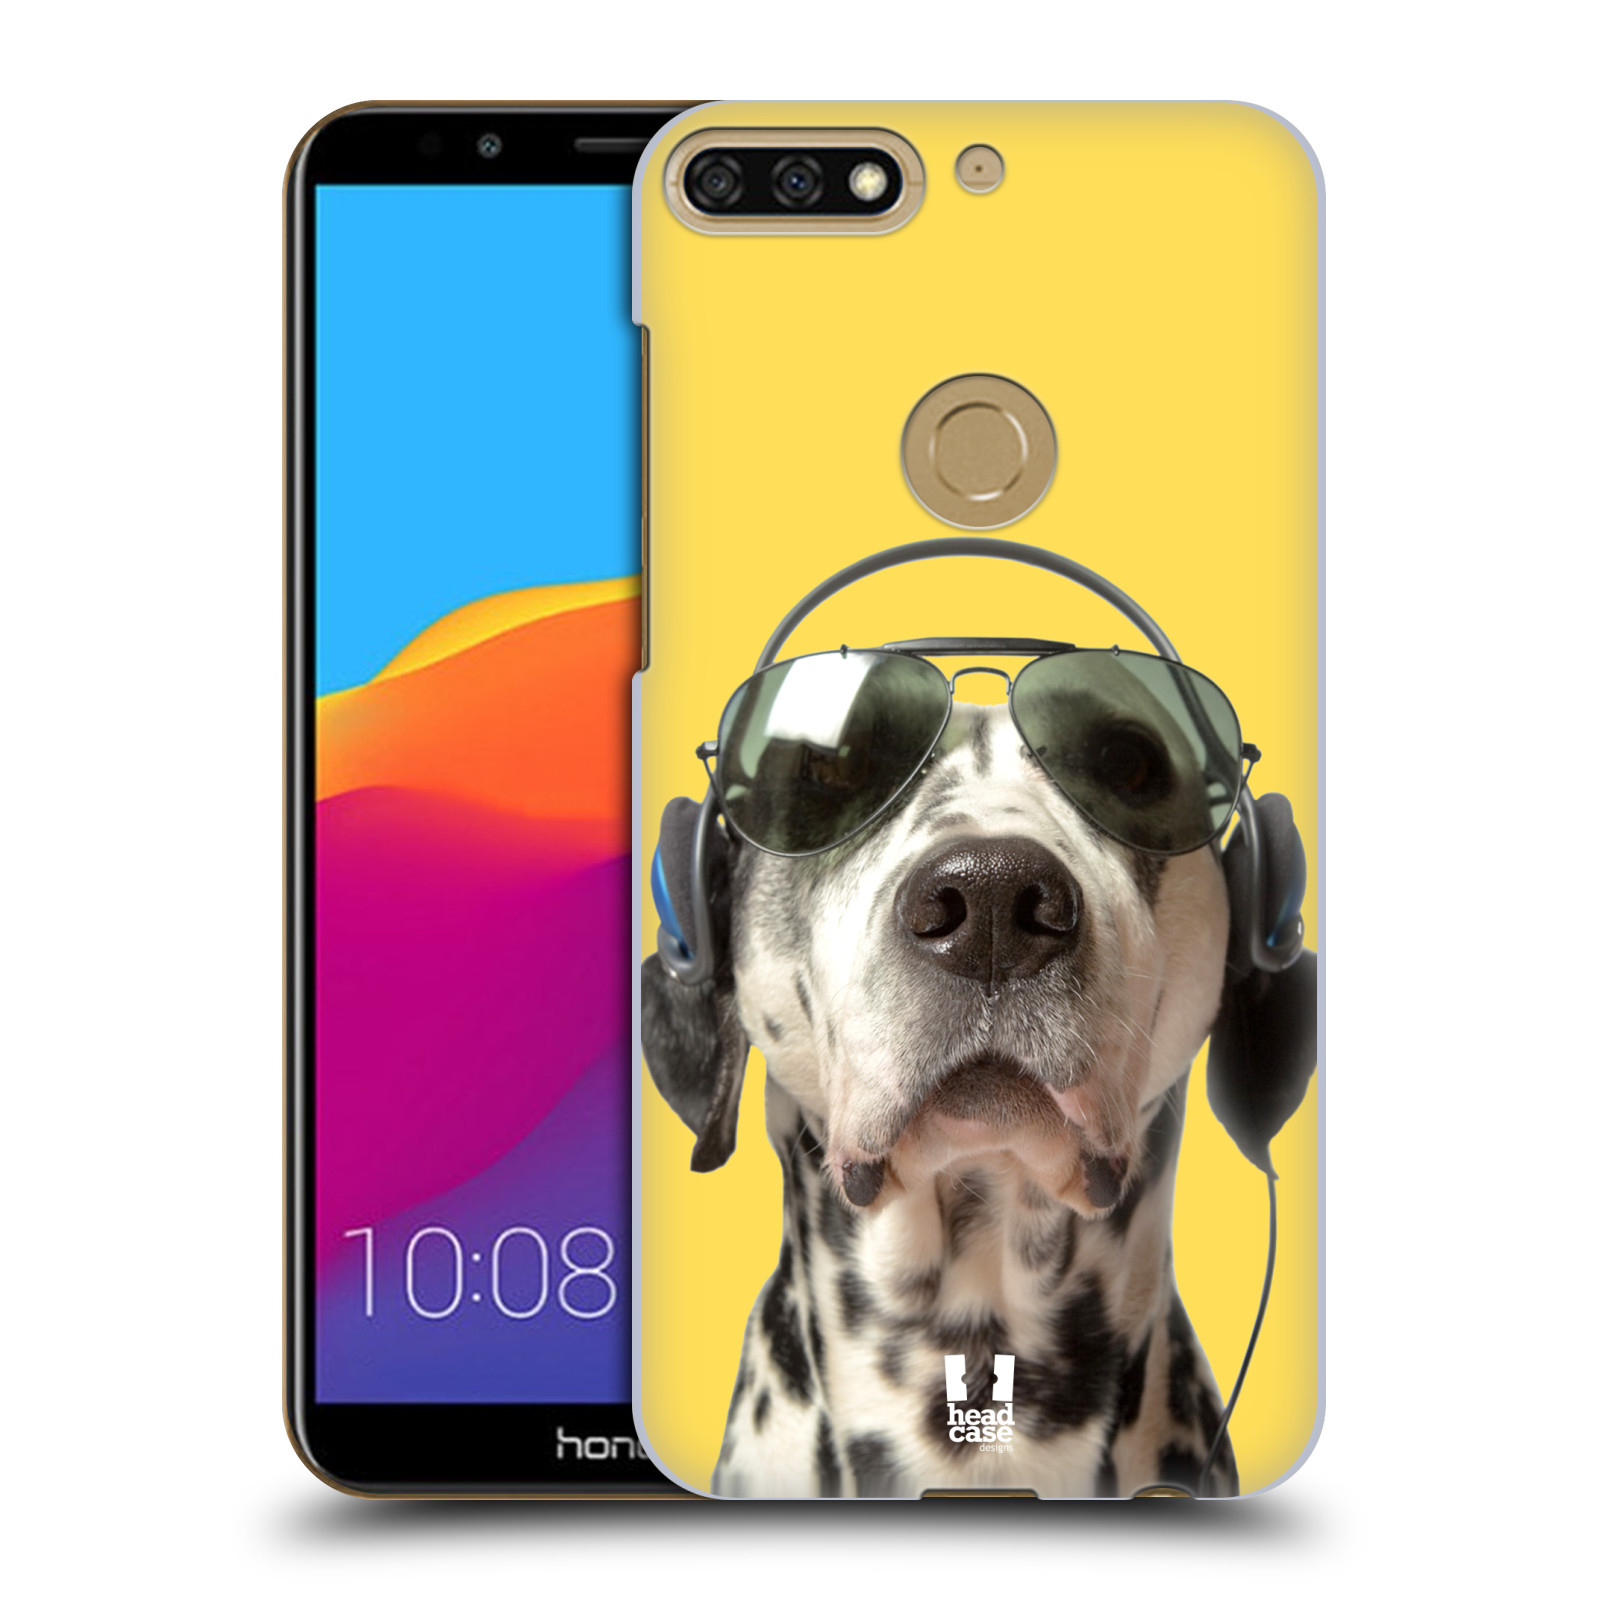 HEAD CASE plastový obal na mobil Honor 7c vzor Legrační zvířátka dalmatin se sluchátky žlutá